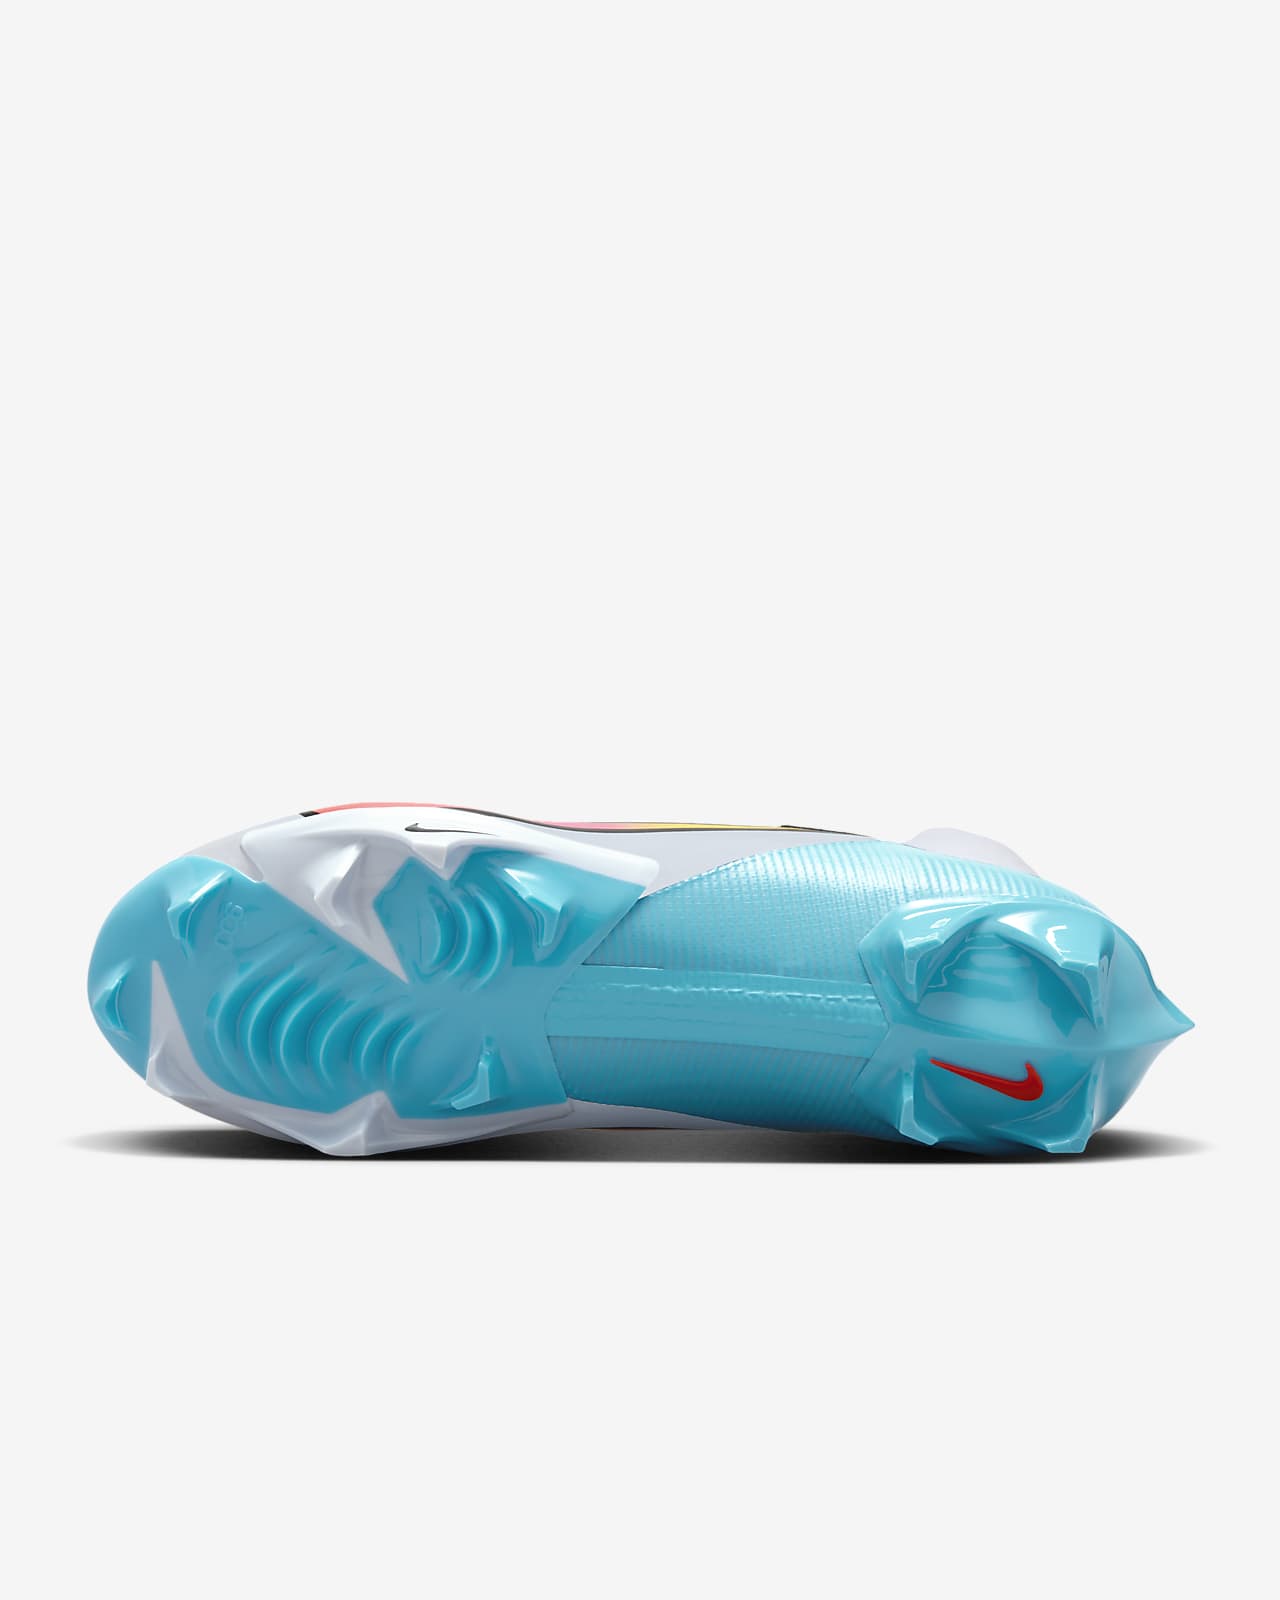 Custom Nike vapor 360 edge cleats | SidelineSwap